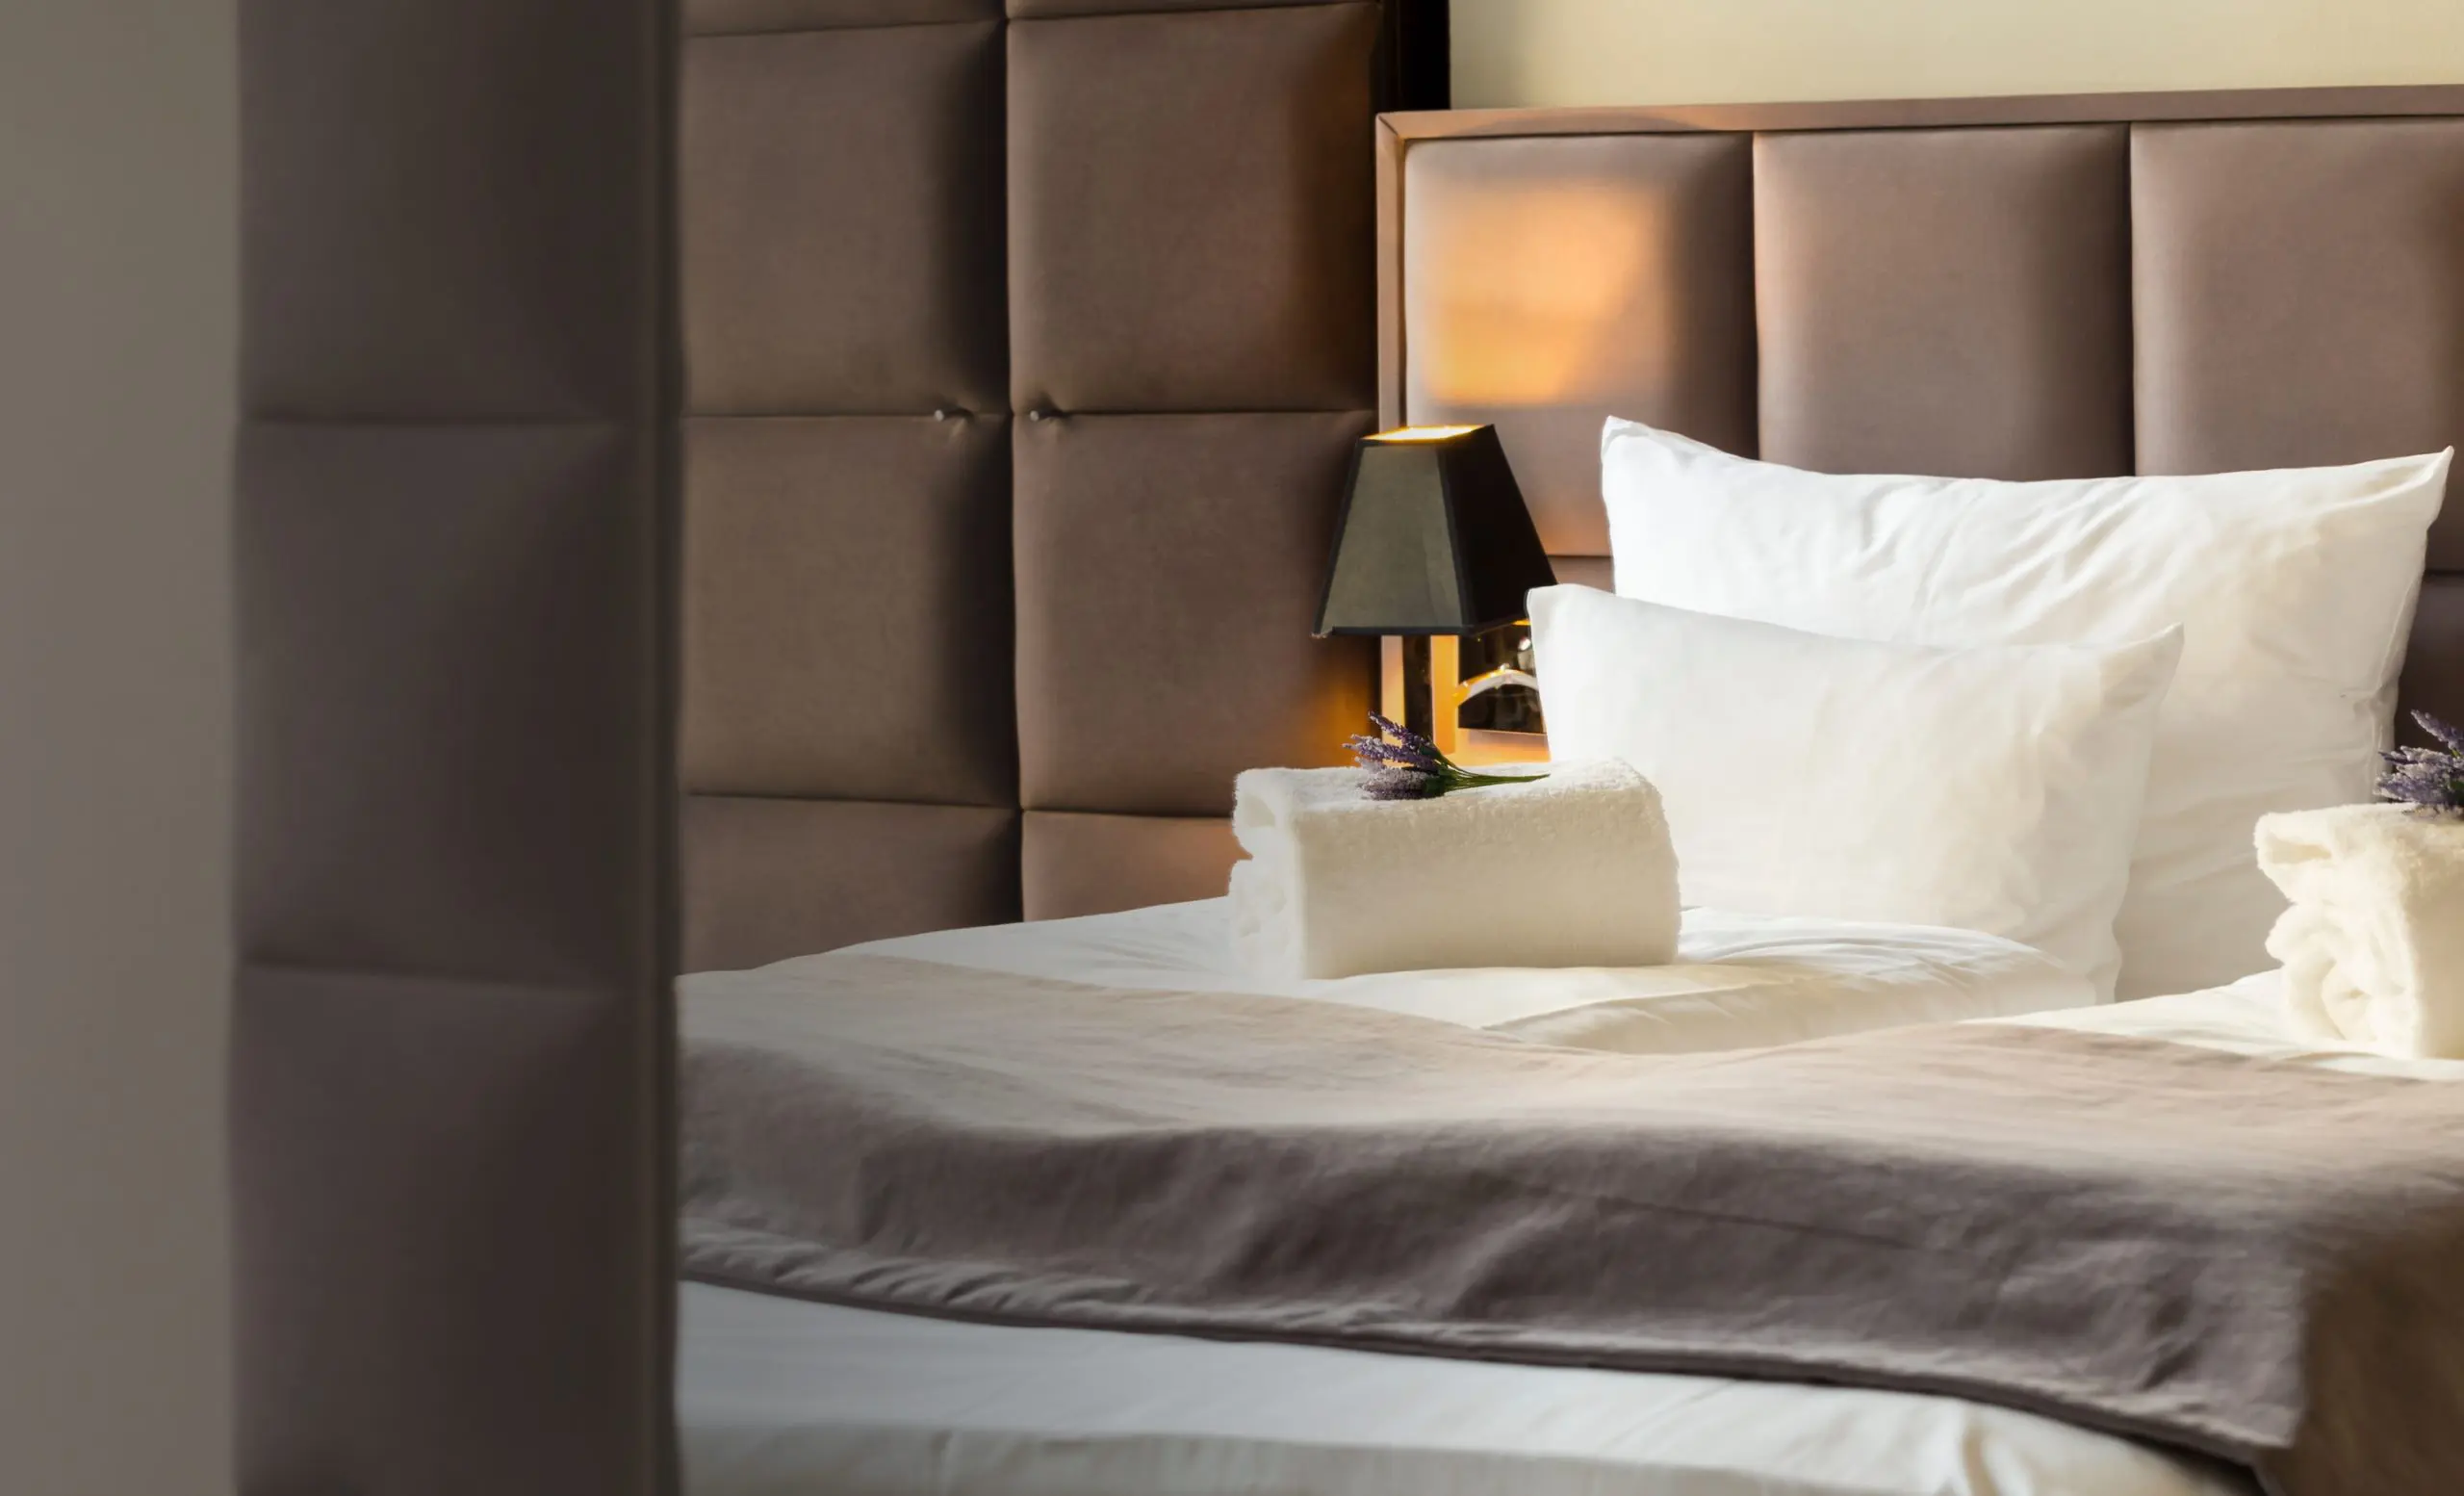 Hotel room - hotel storage solutions from BigSteelBox